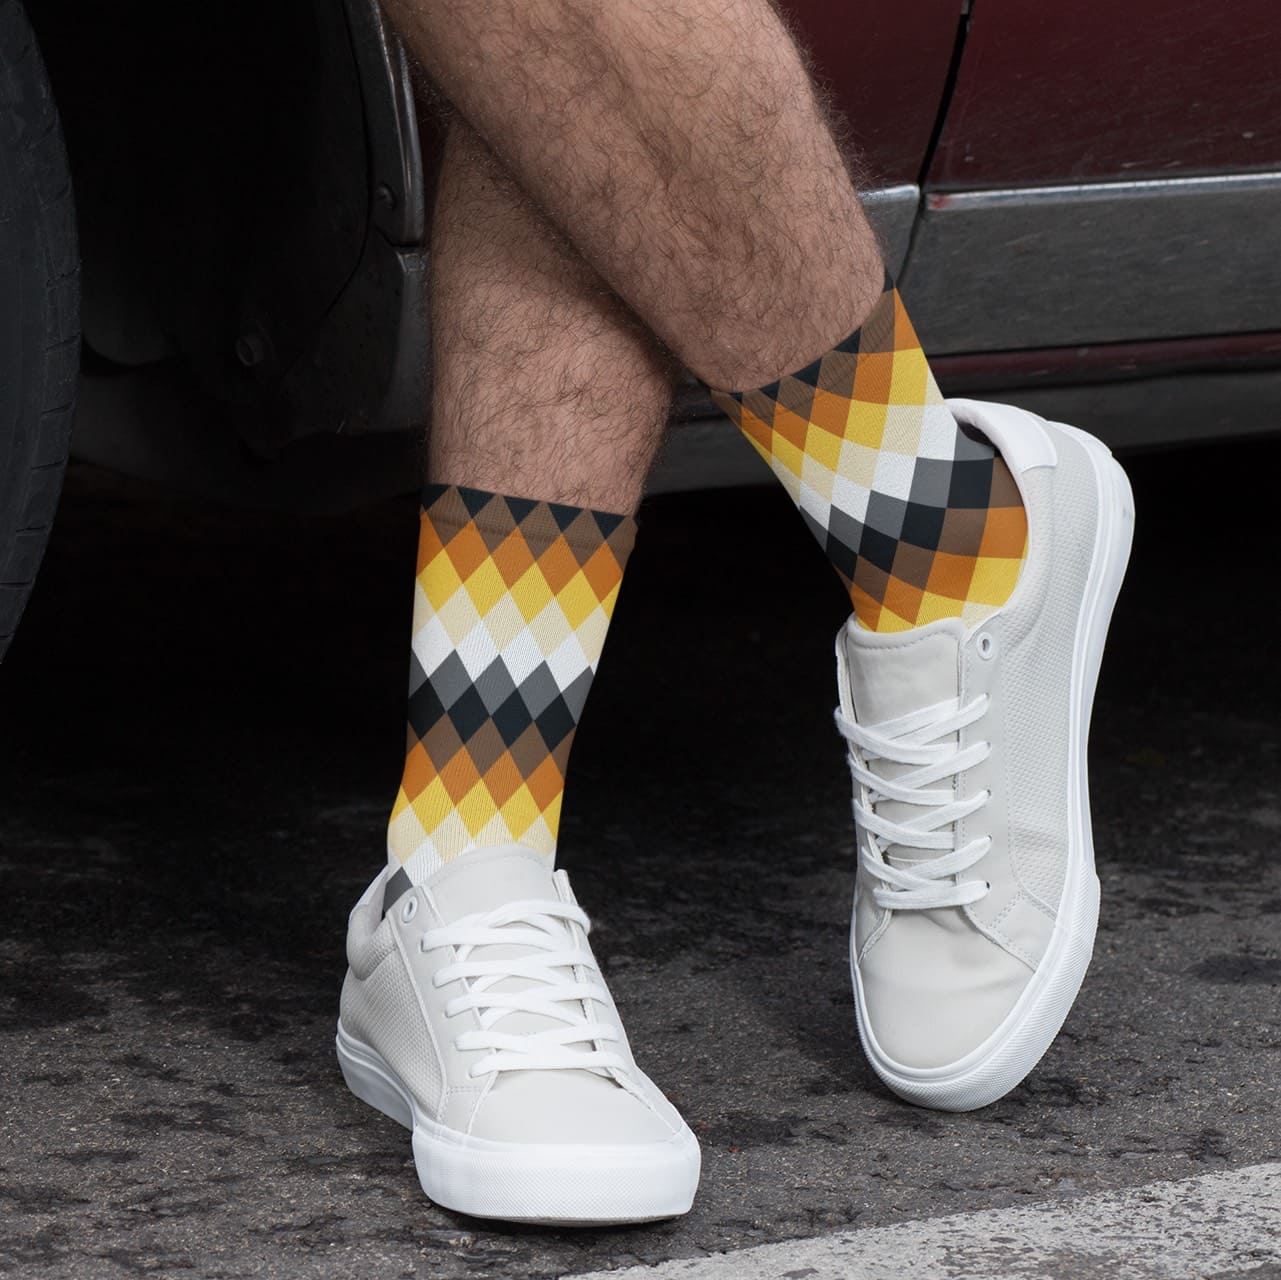 bear pride socks, discreet diamond pattern, in use